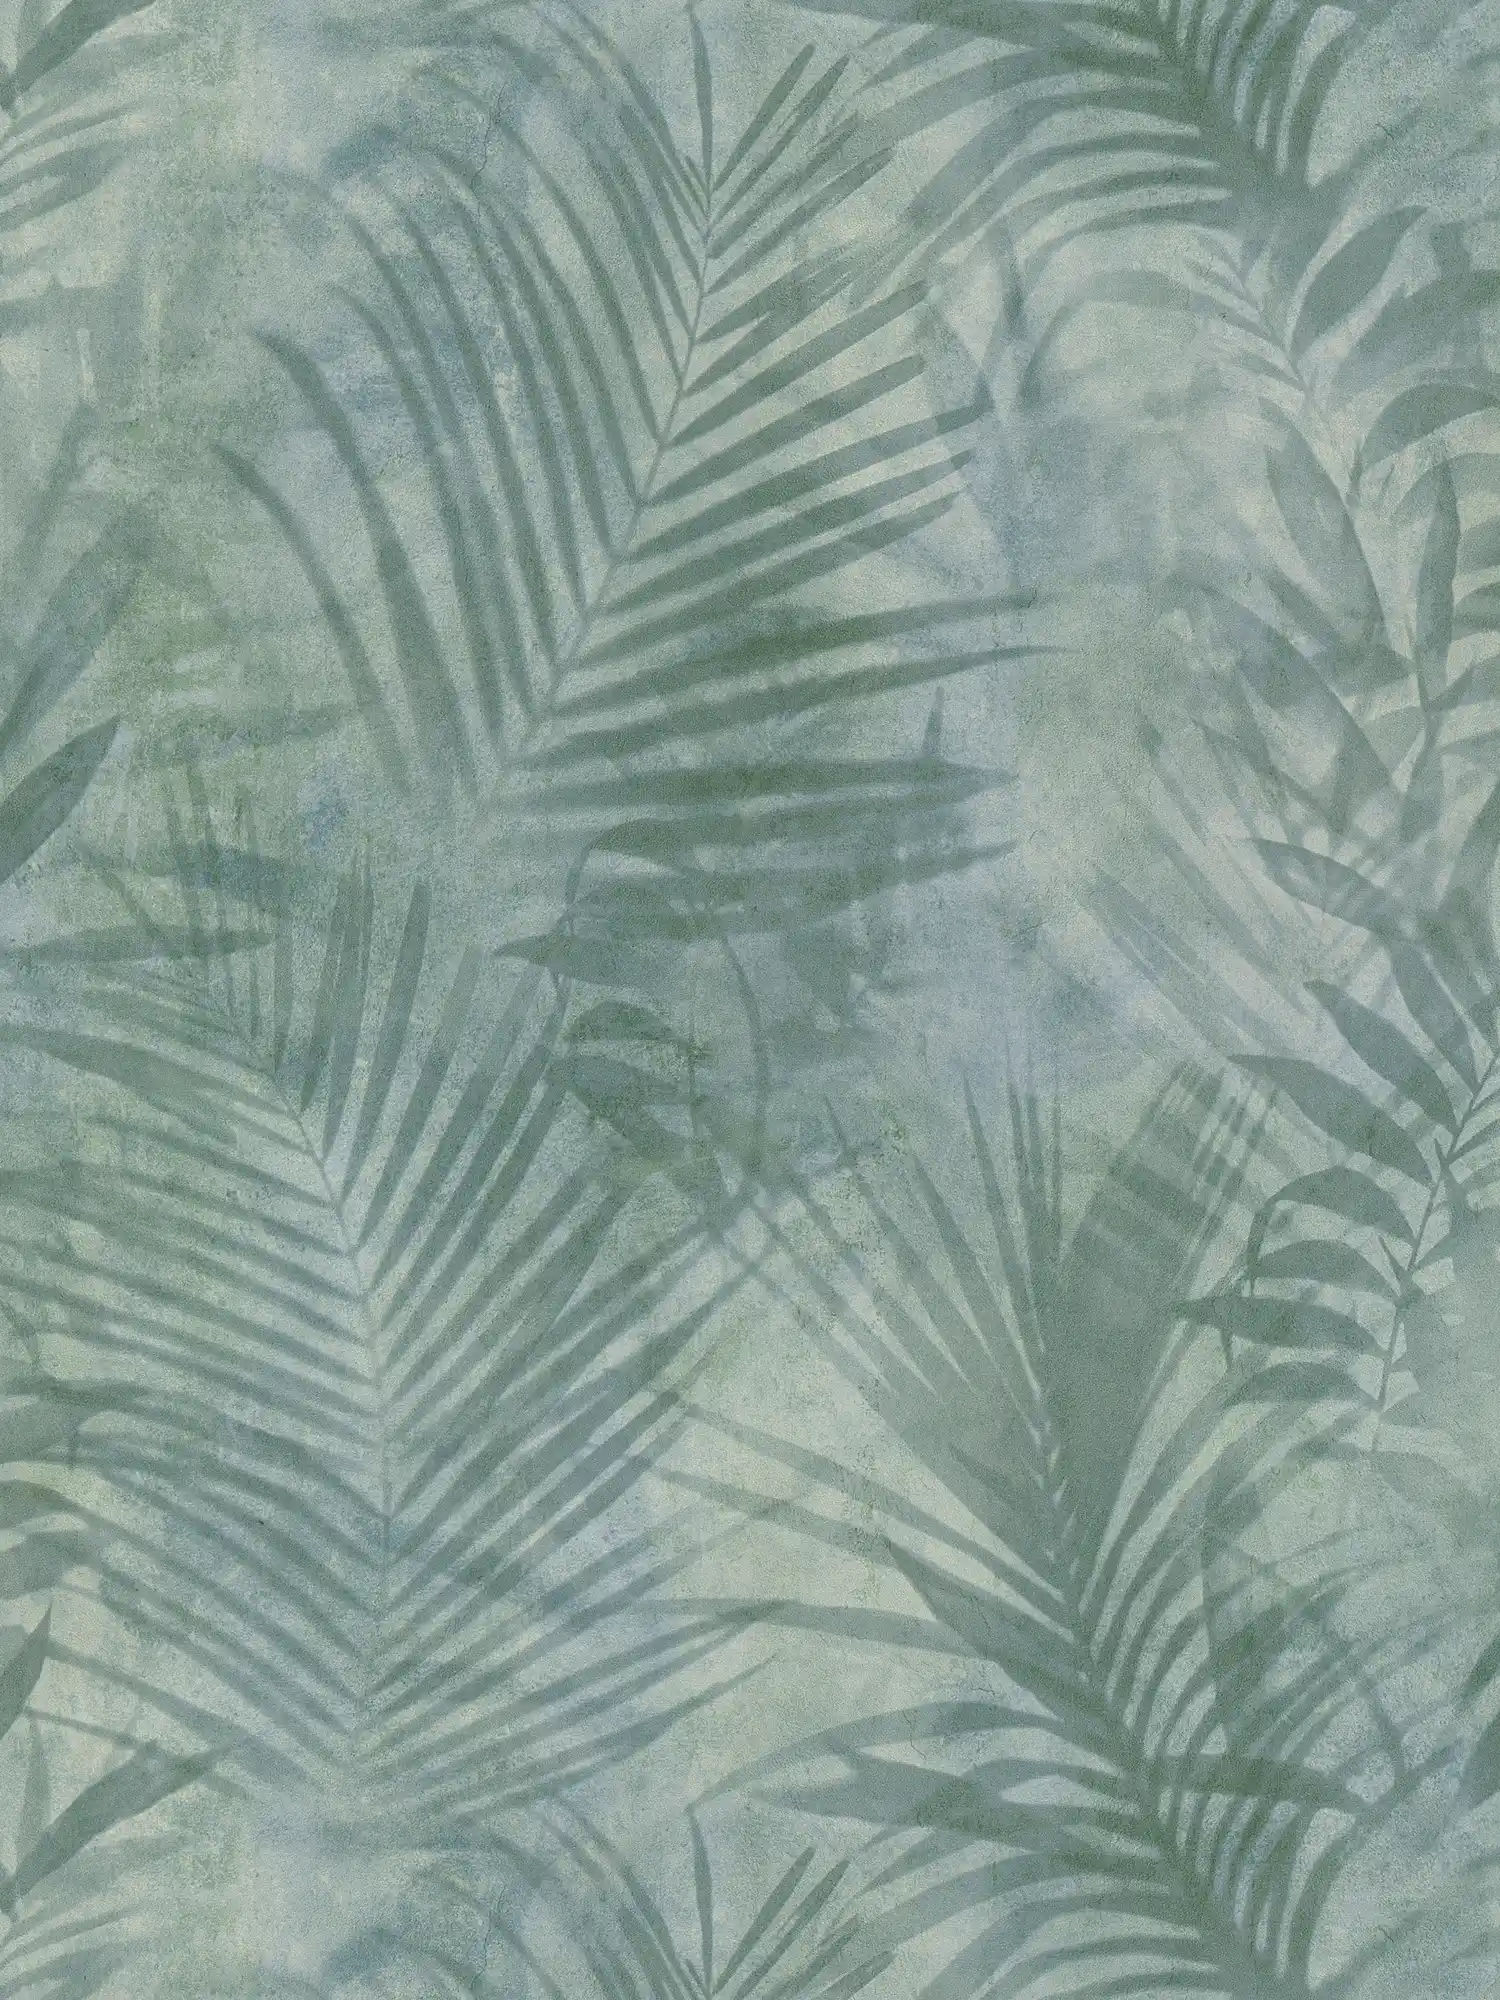         Tapete Palmenmuster in Leinenoptik – Grün, Blau, Grau
    